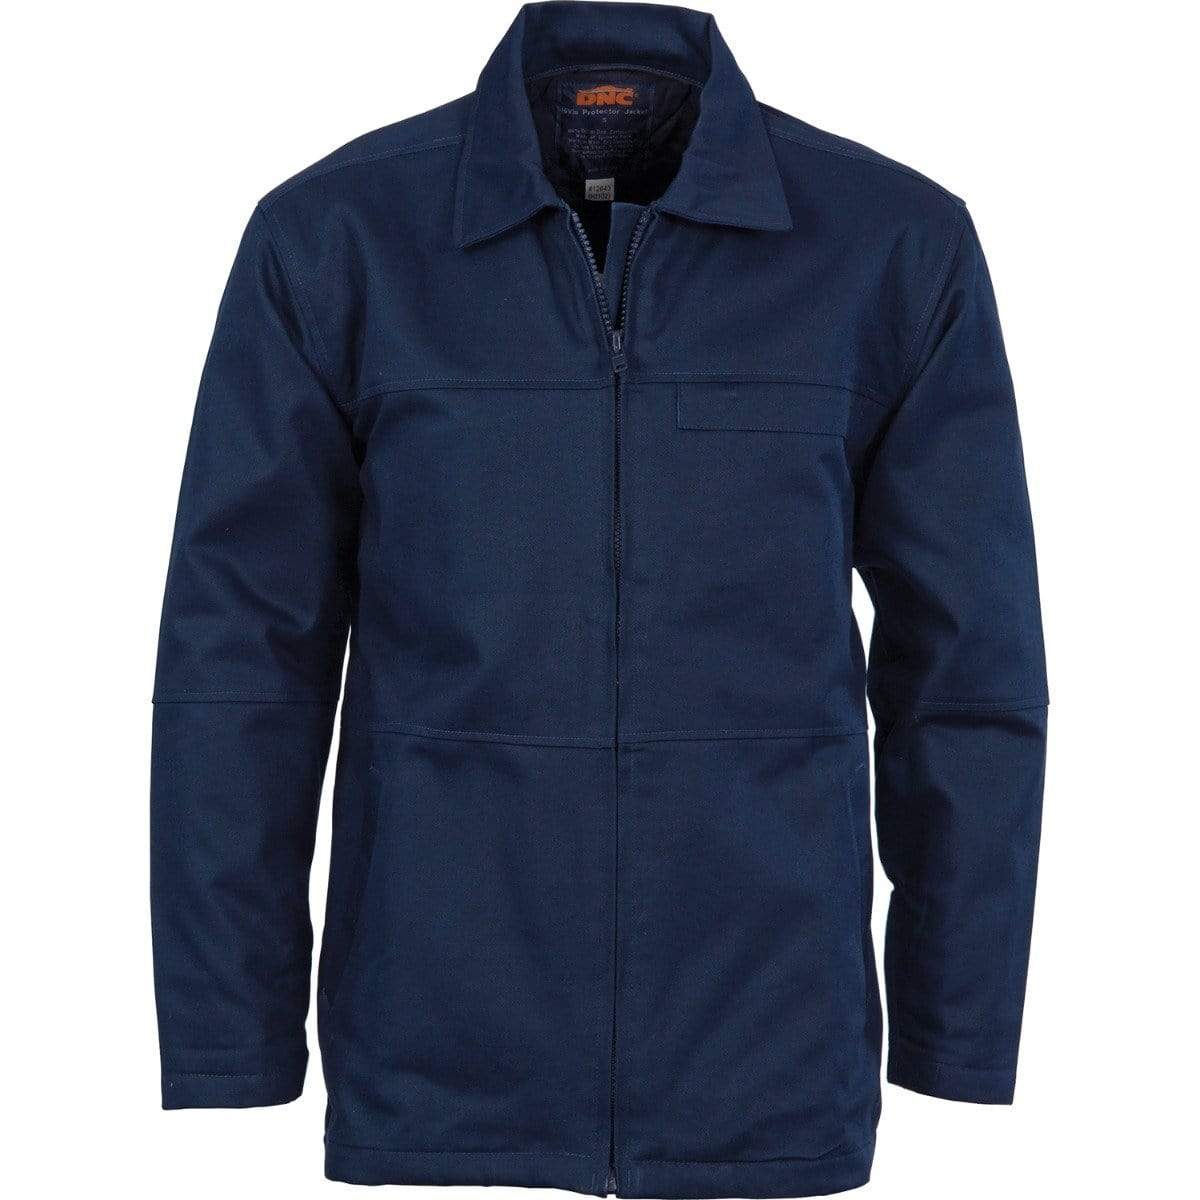 Dnc Workwear Protector Cotton Jacket - 3606 Corporate Wear DNC Workwear Navy XS 